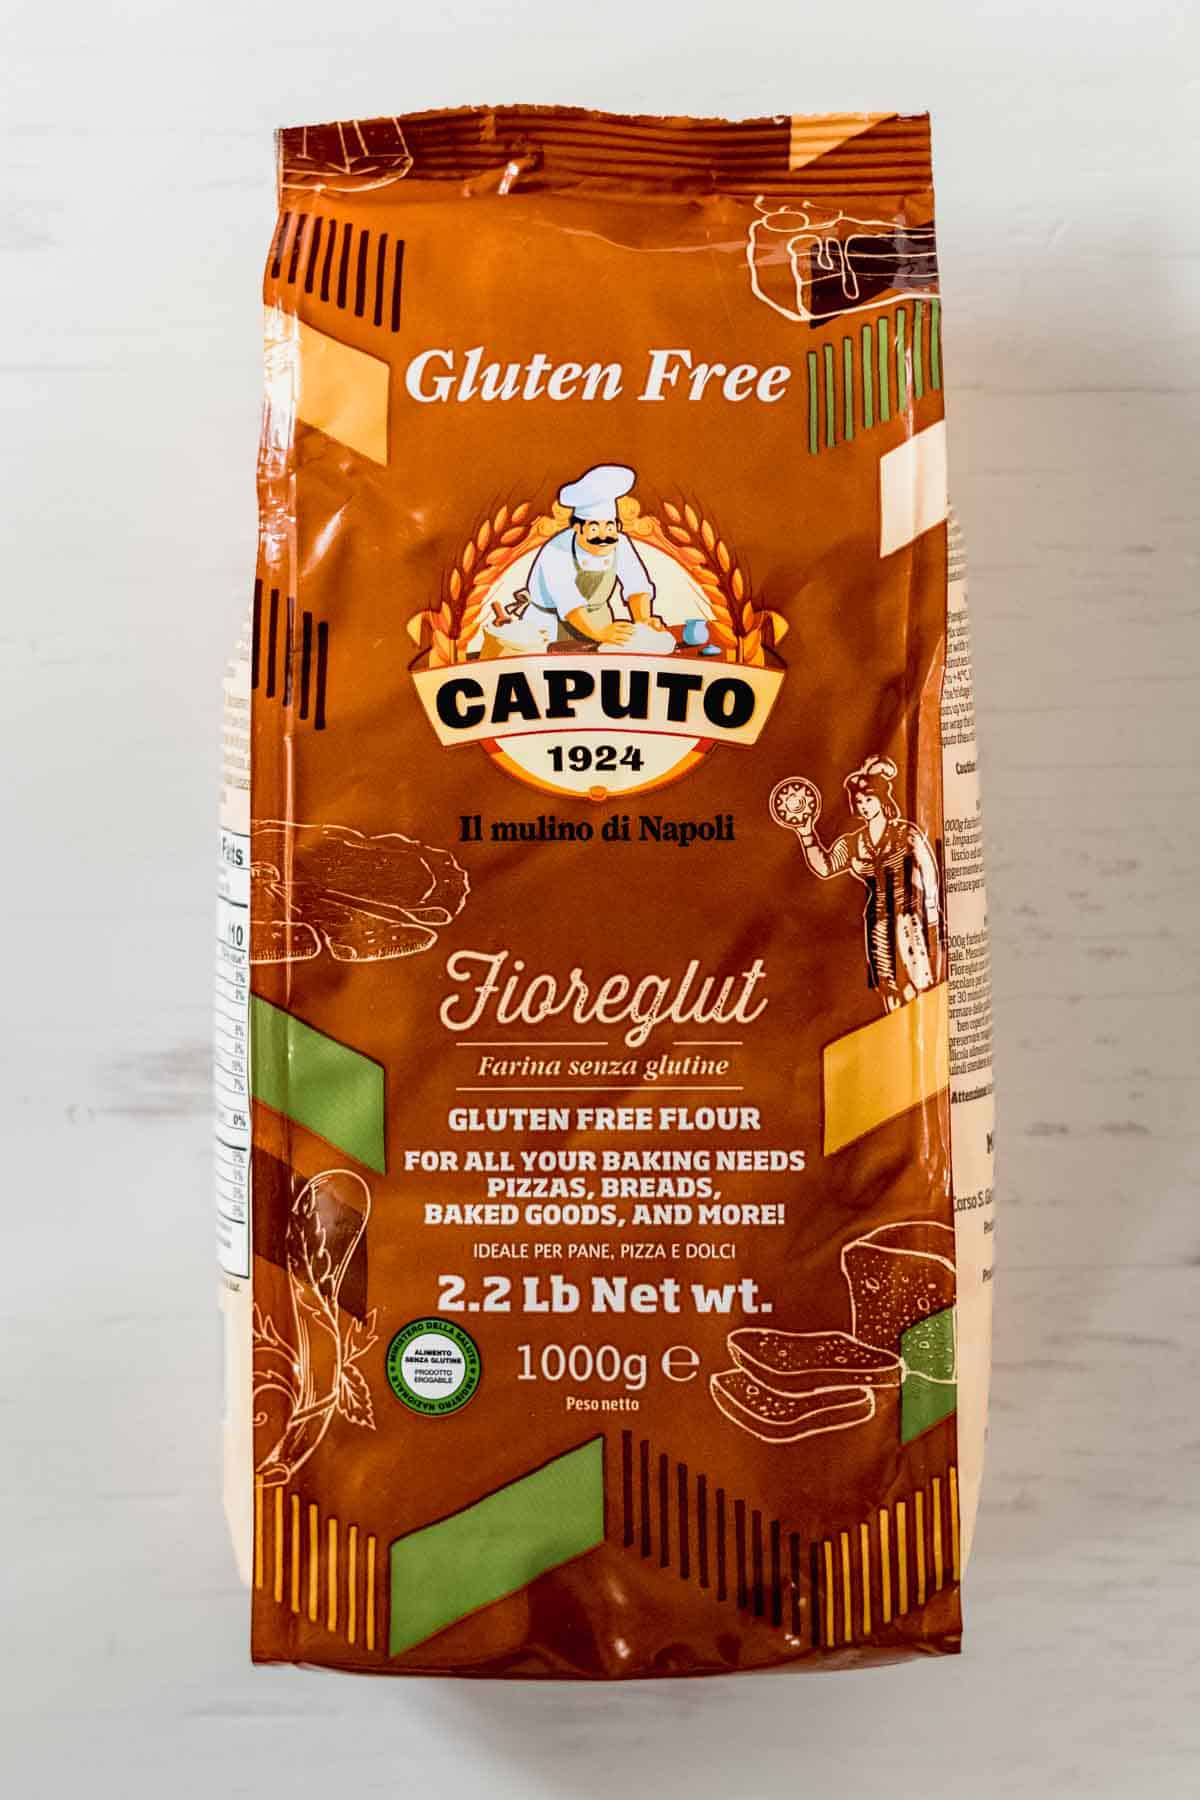 A bag of Caputo gluten free flour on wooden surface.